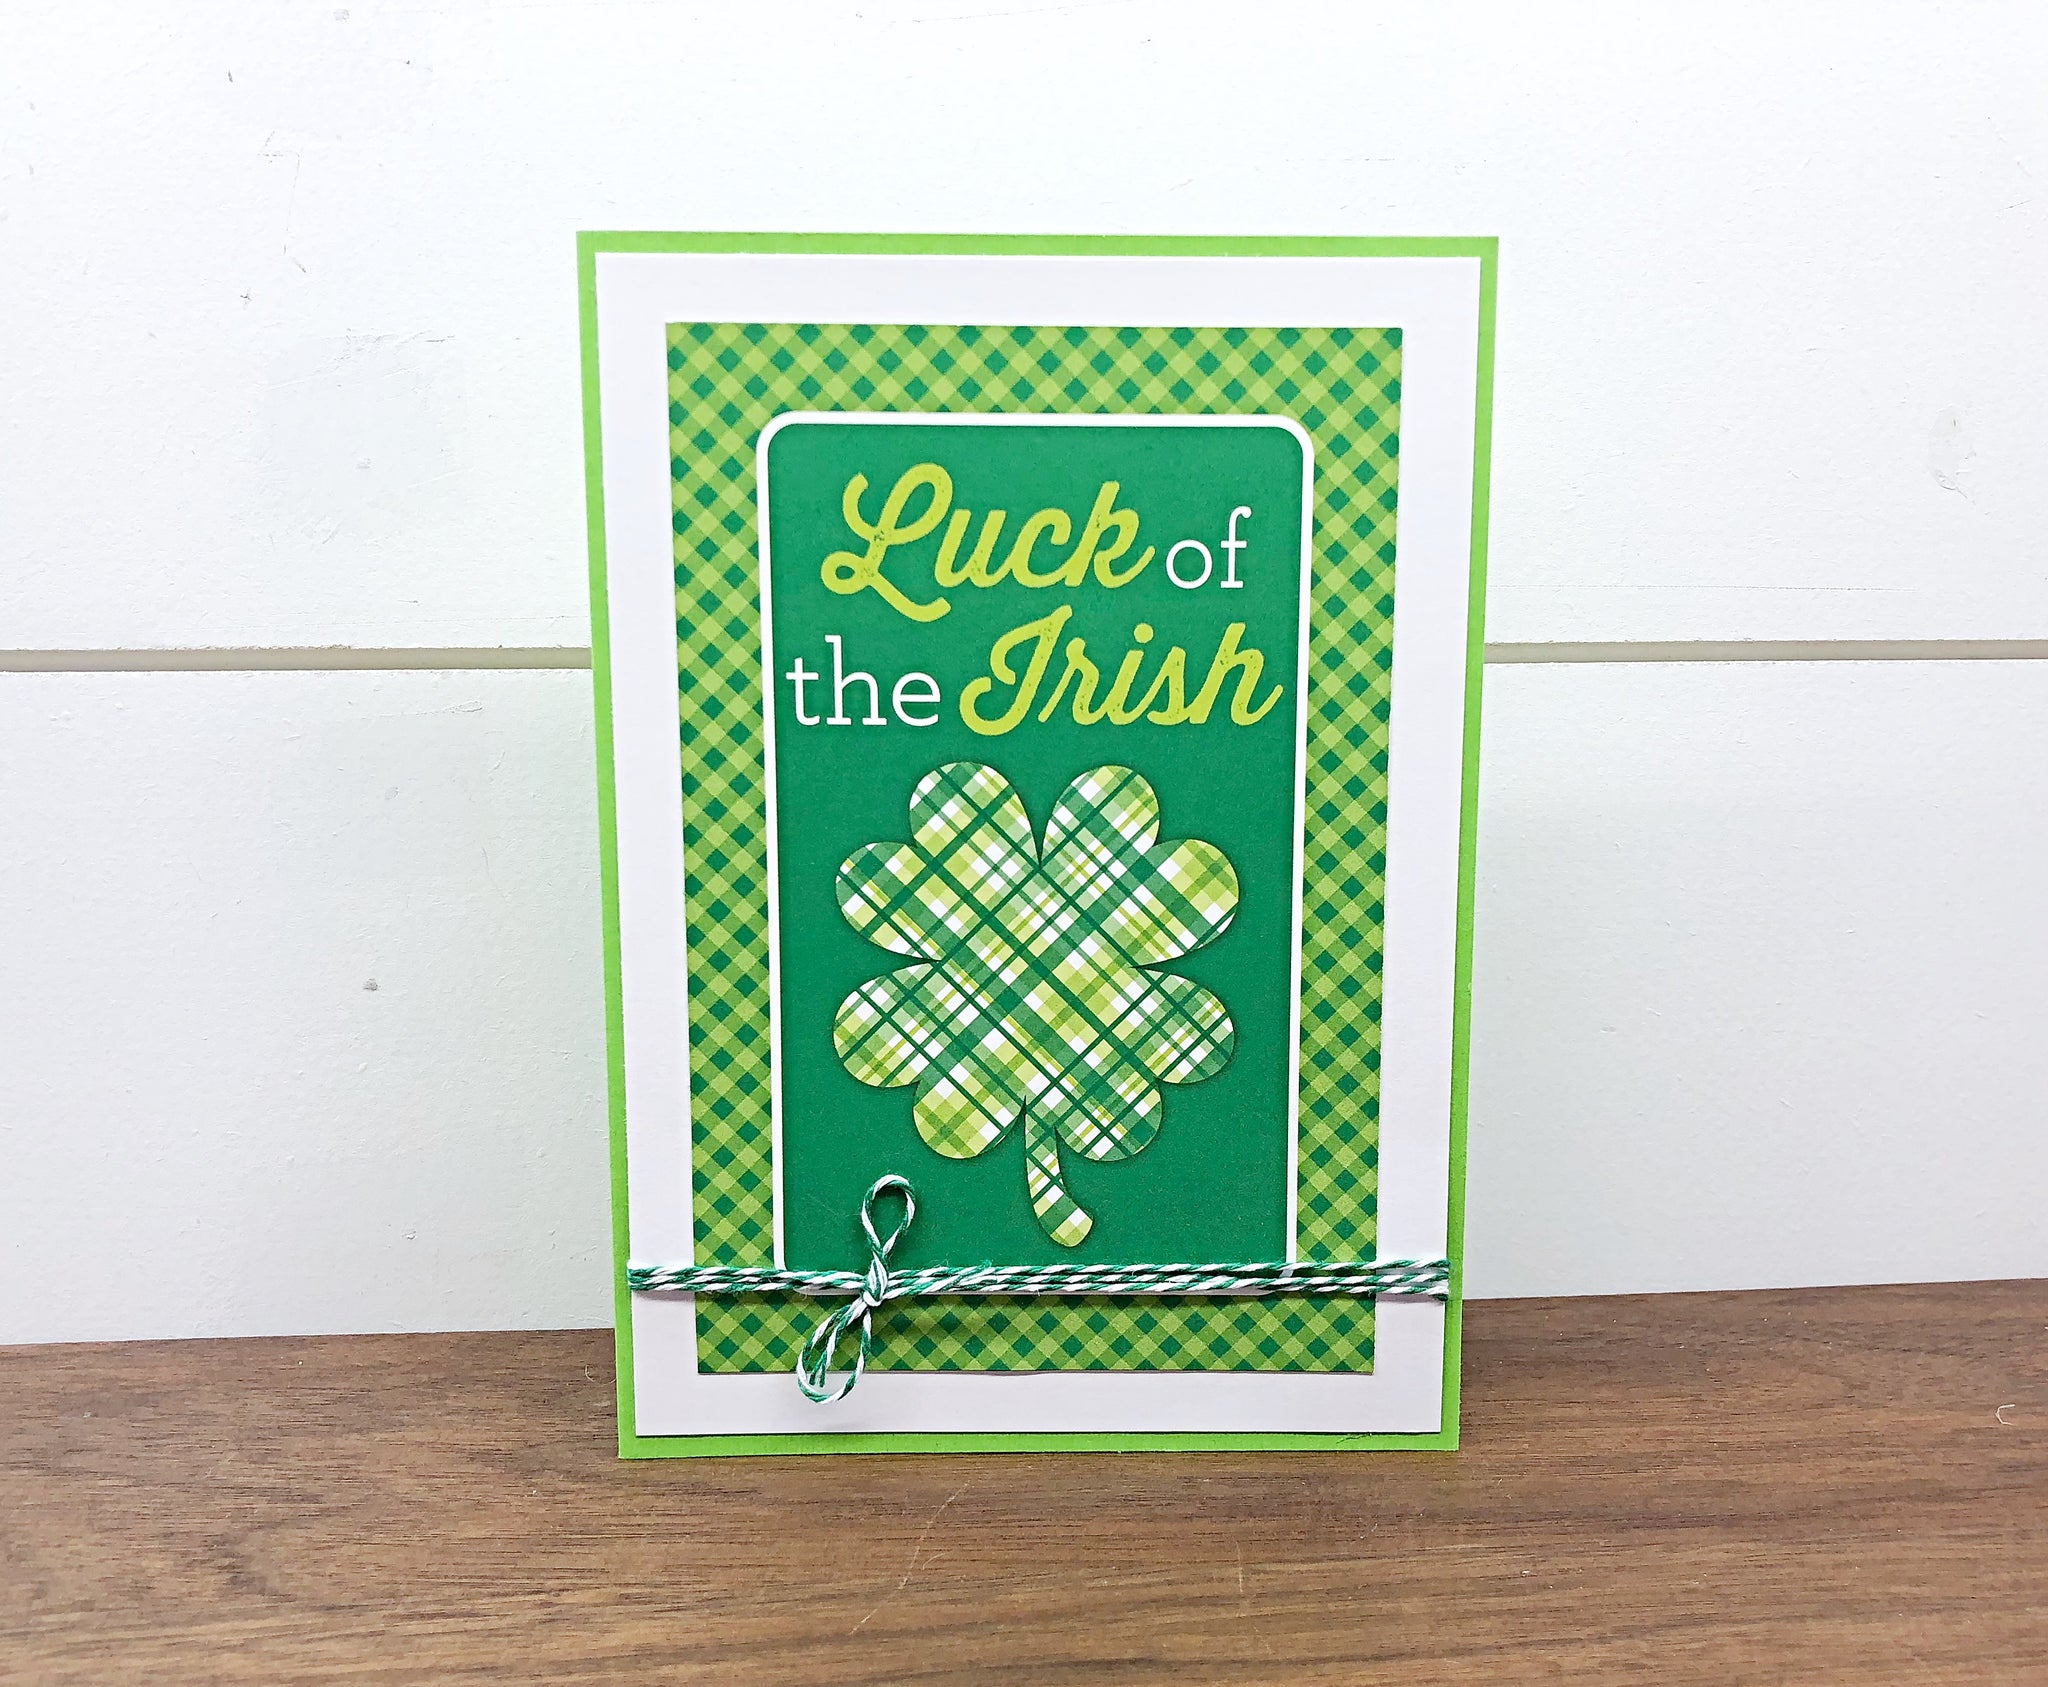 Cute St. Patrick’s Day Handmade Greeting Card, Luck of the Irish